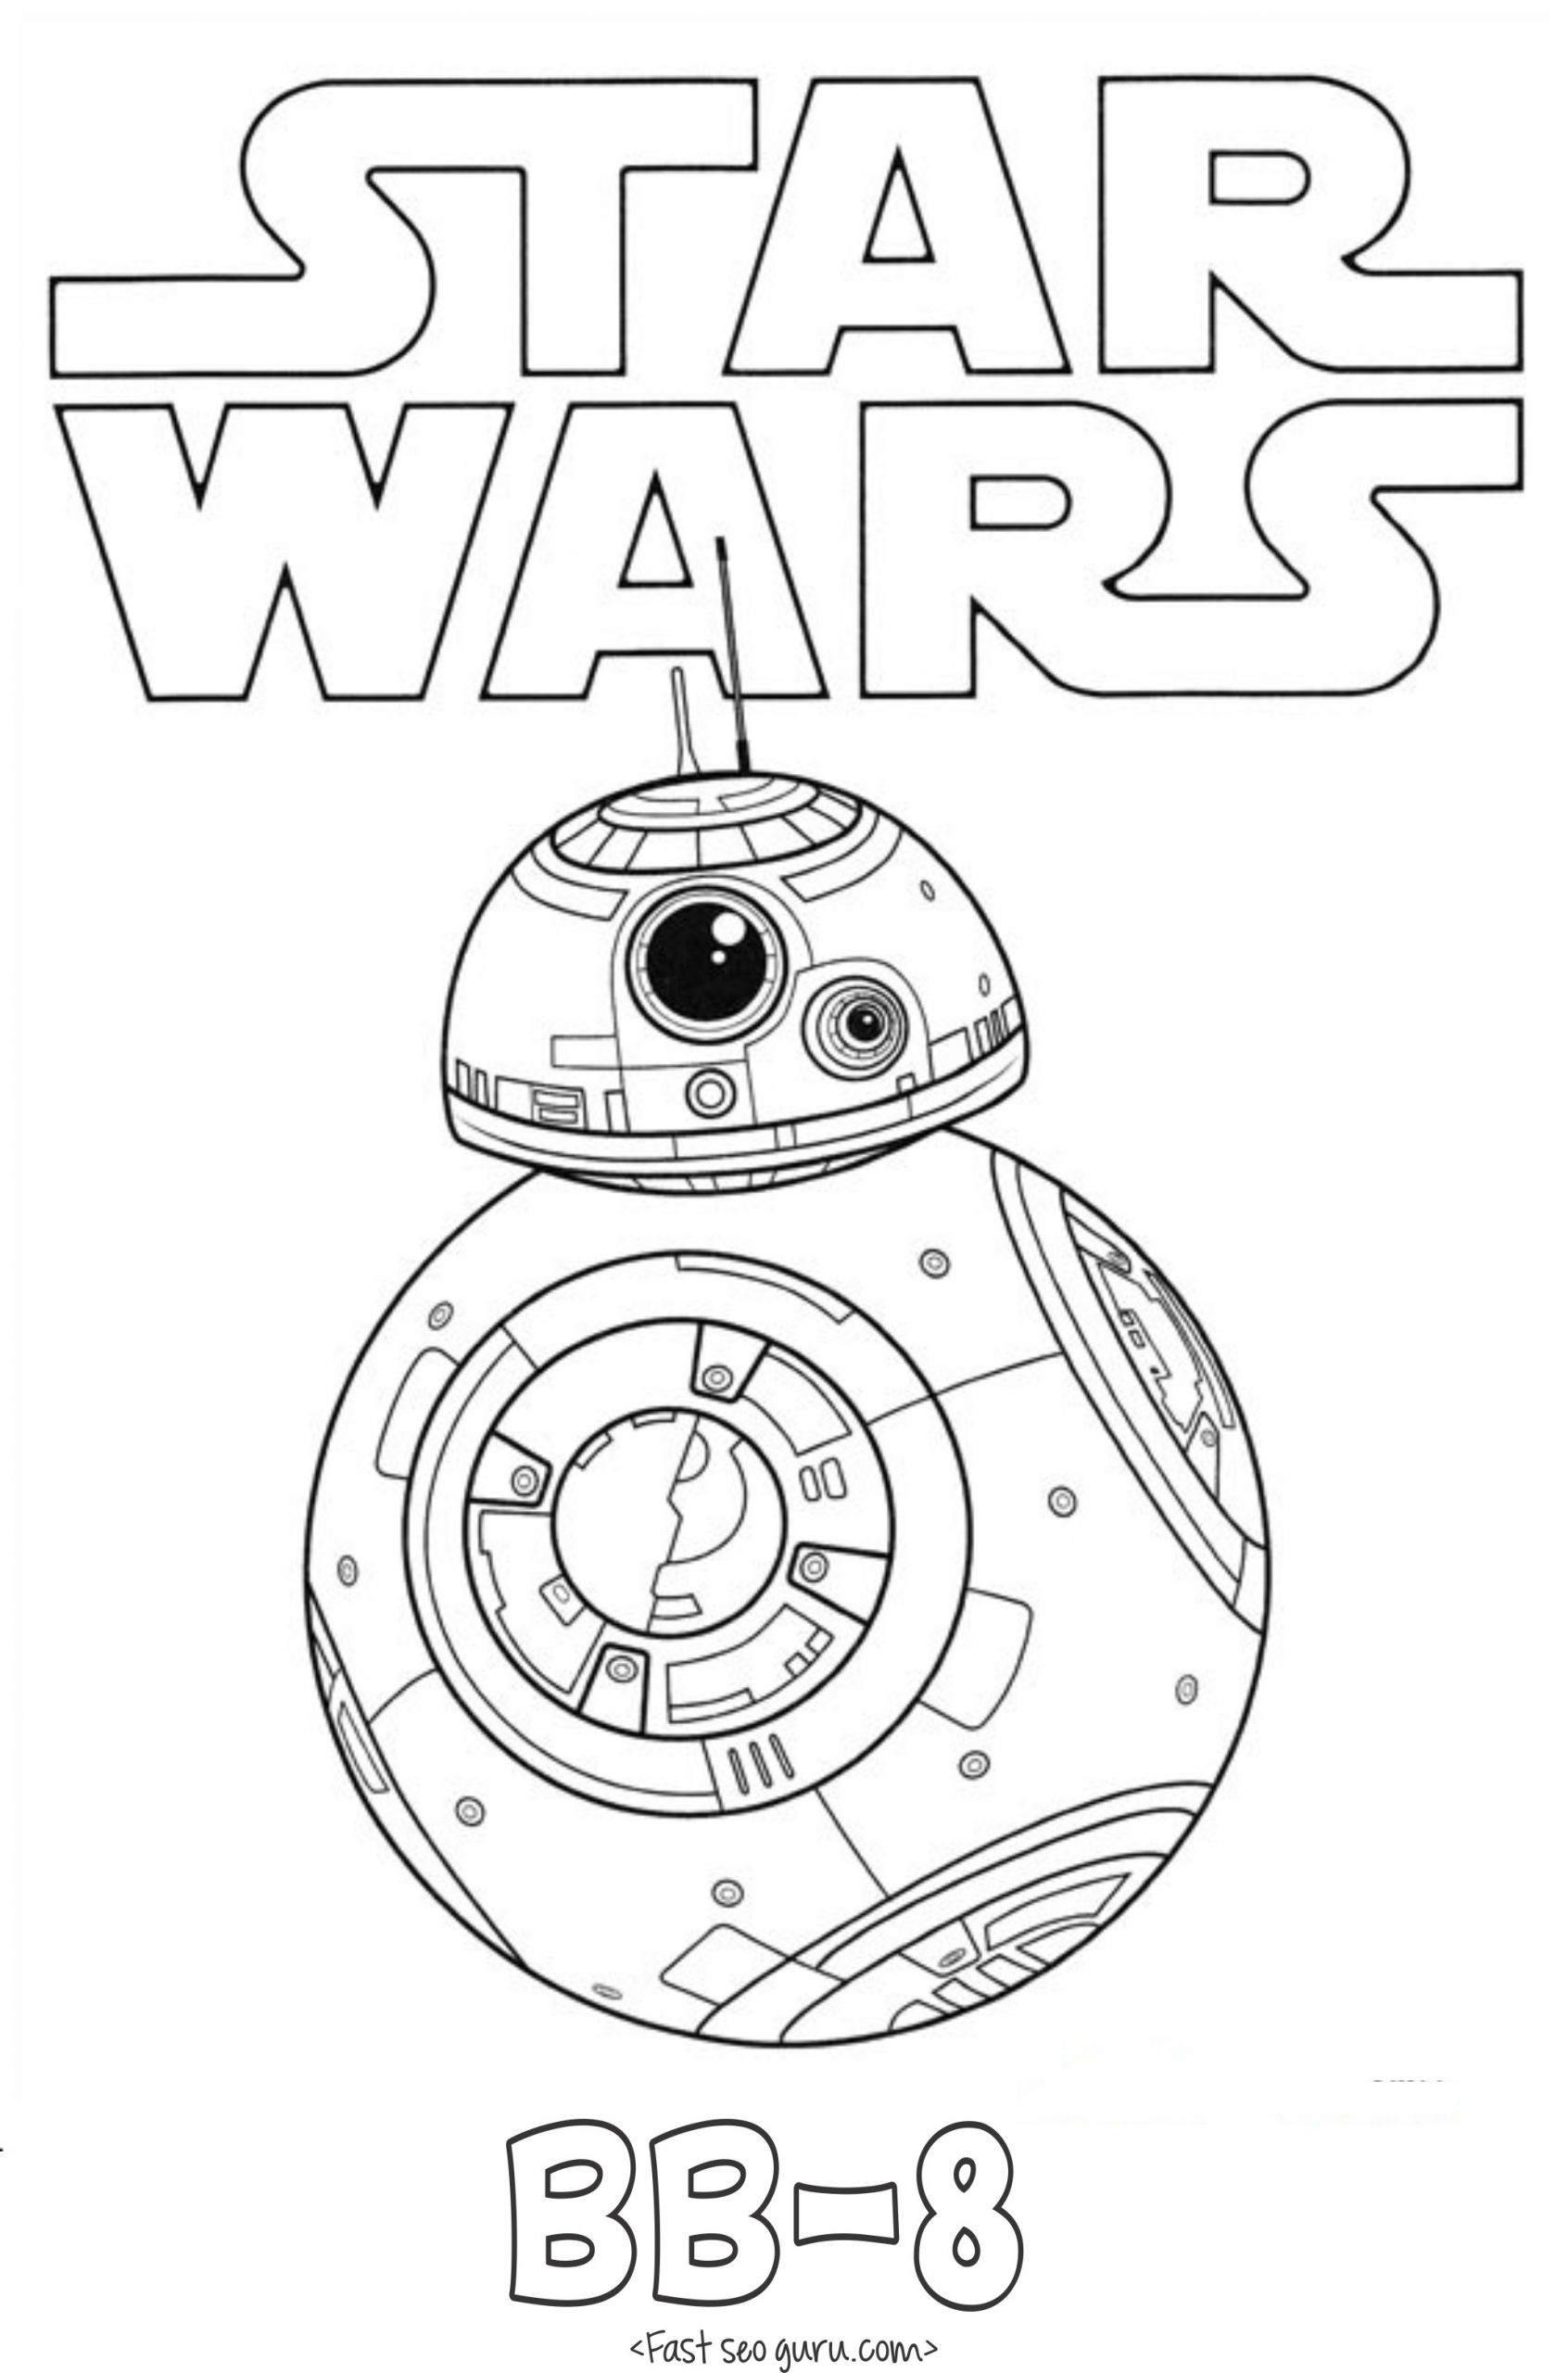 Printable Star Wars Coloring Pages
 Printable Star Wars The Force Awakens BB 8 coloring pages